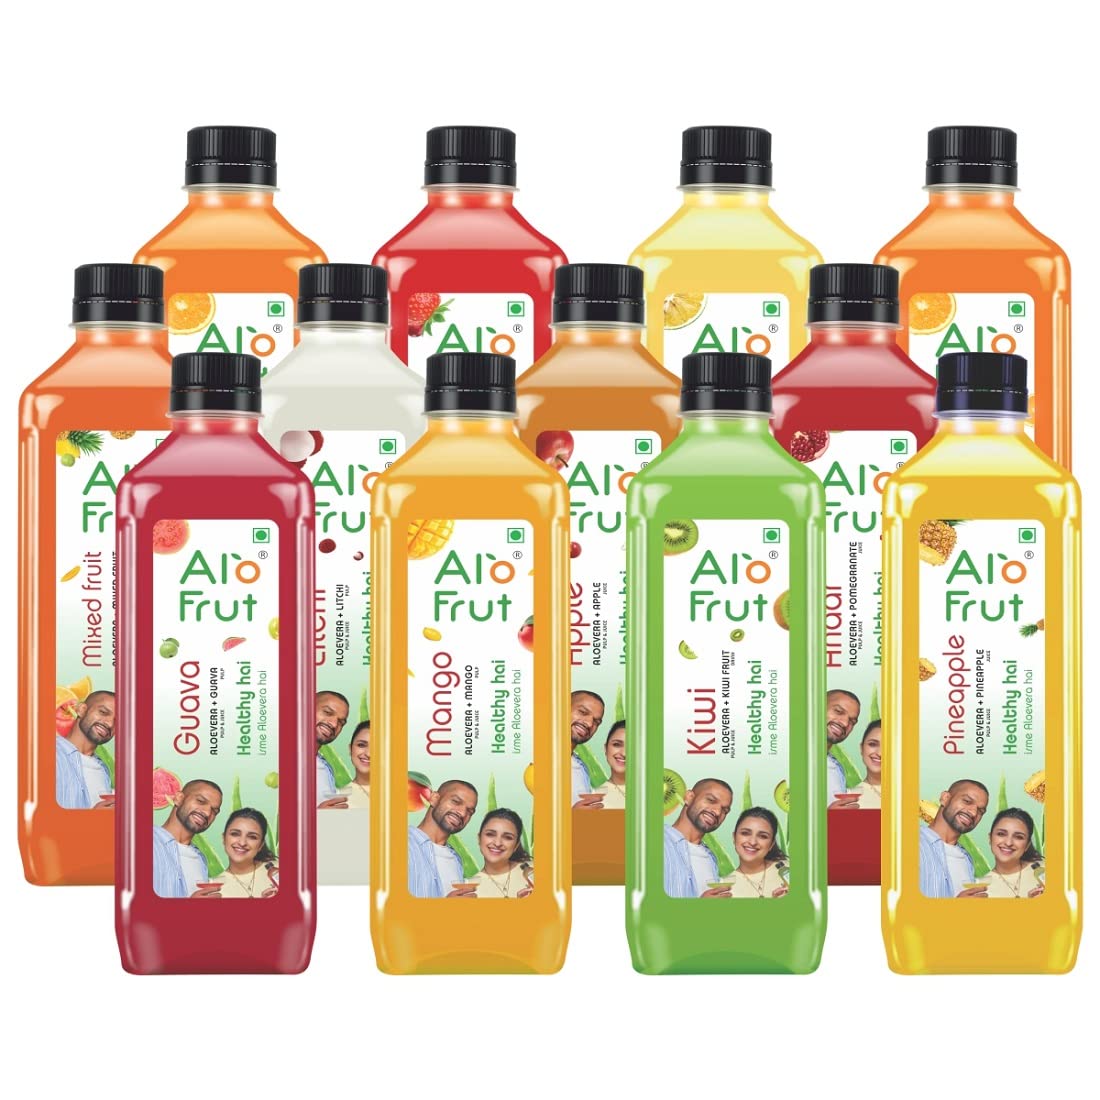 Alo Frut Juice 300 ml - Pack of 16| Fruit Juice and Aloevera Pulp | 4 ea of Litchi, Orange, Apple, Guava